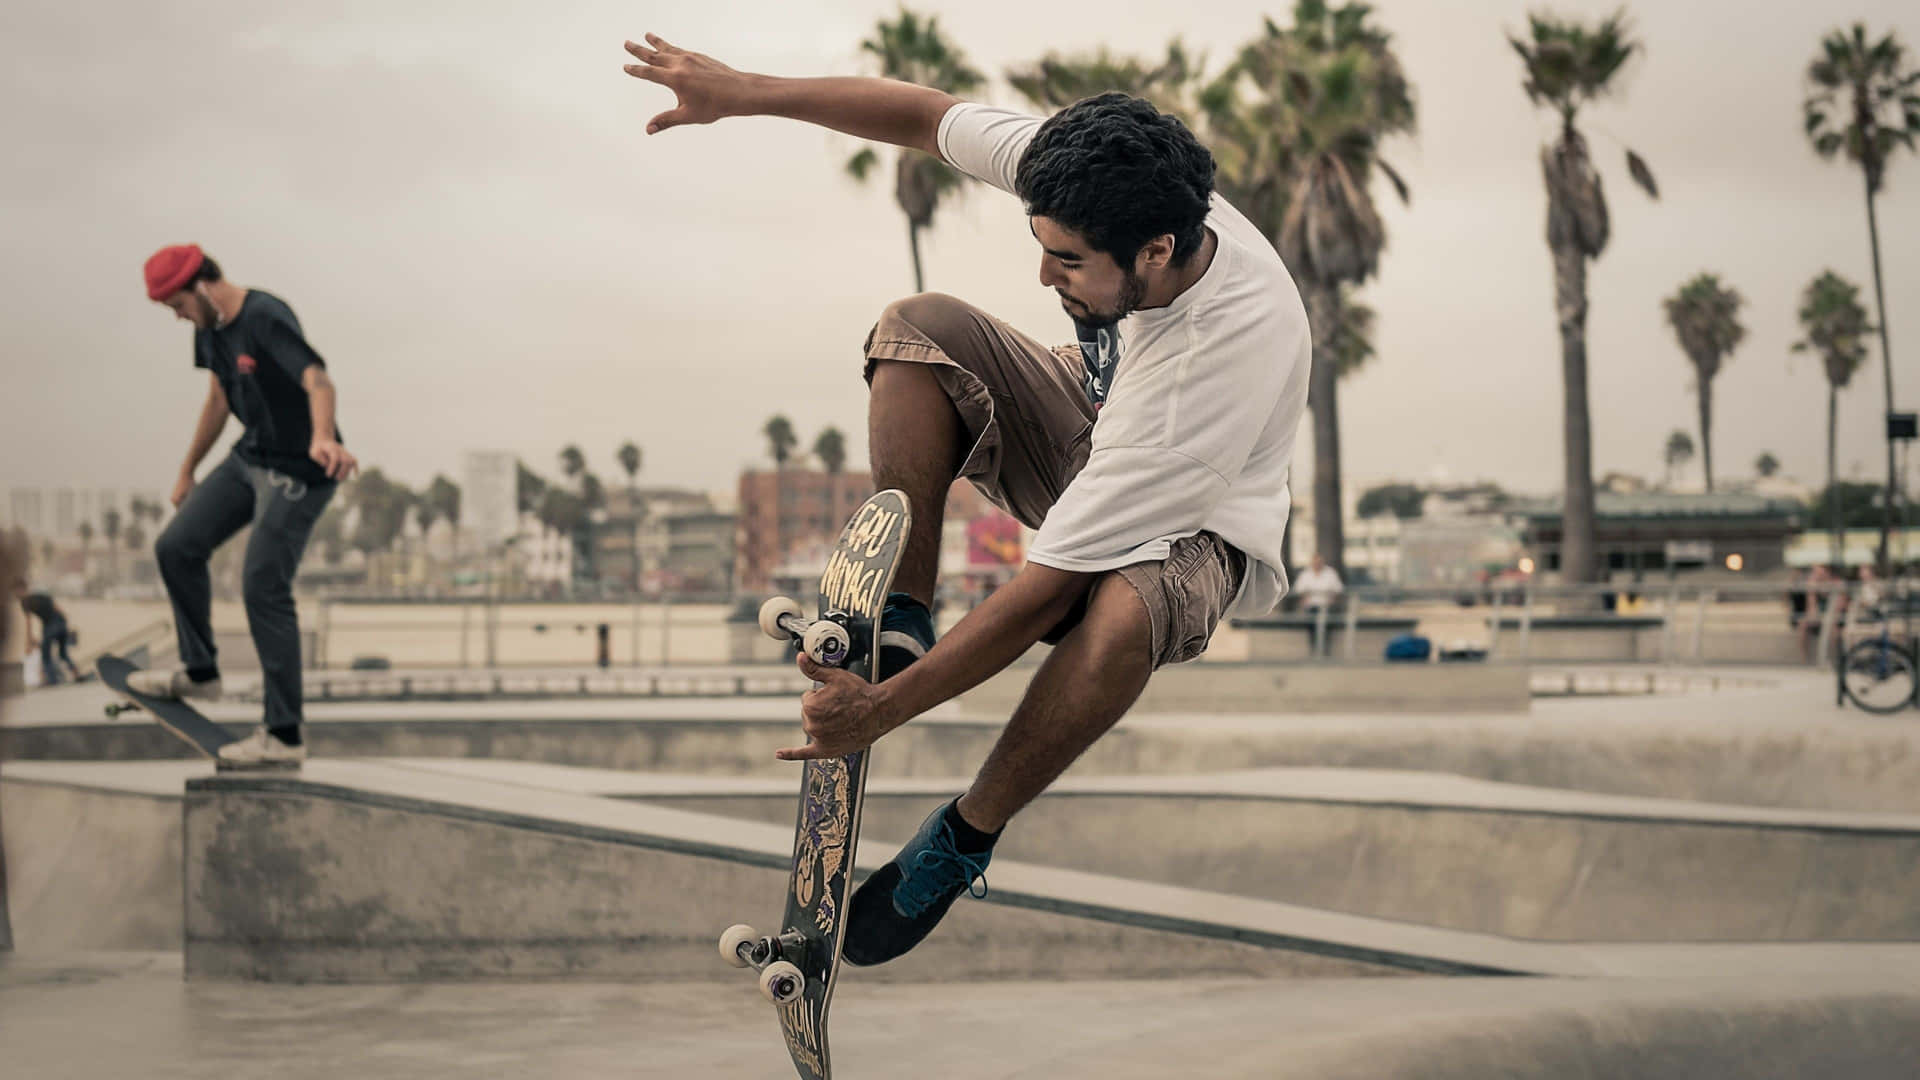 Skateboarder performing a kickflip trick